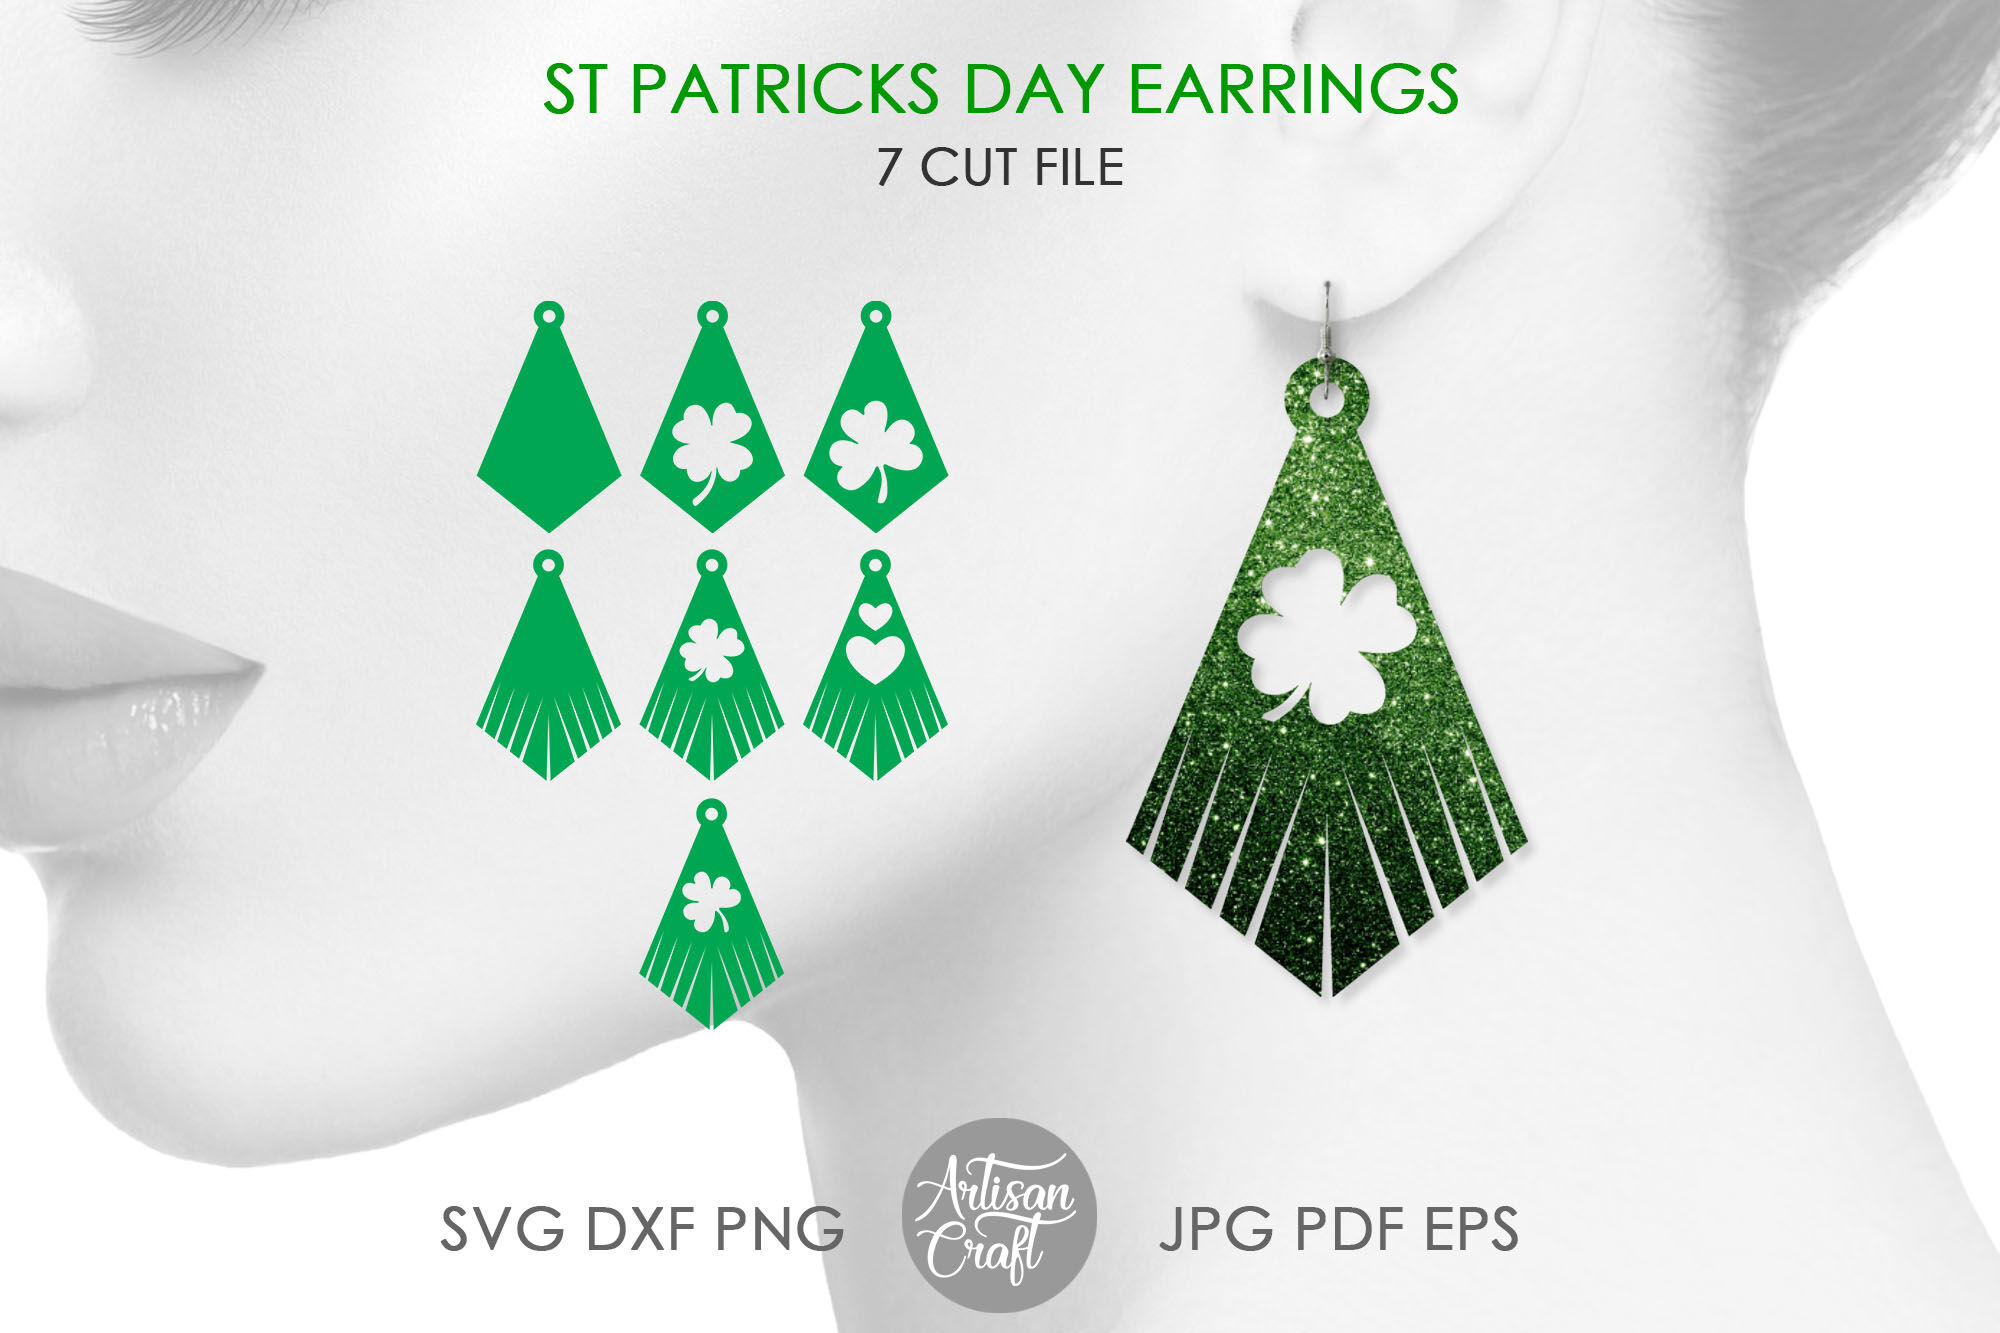 St Patrick's Day Earrings SVG/ Cut File/ Cricut/ Laser Cut